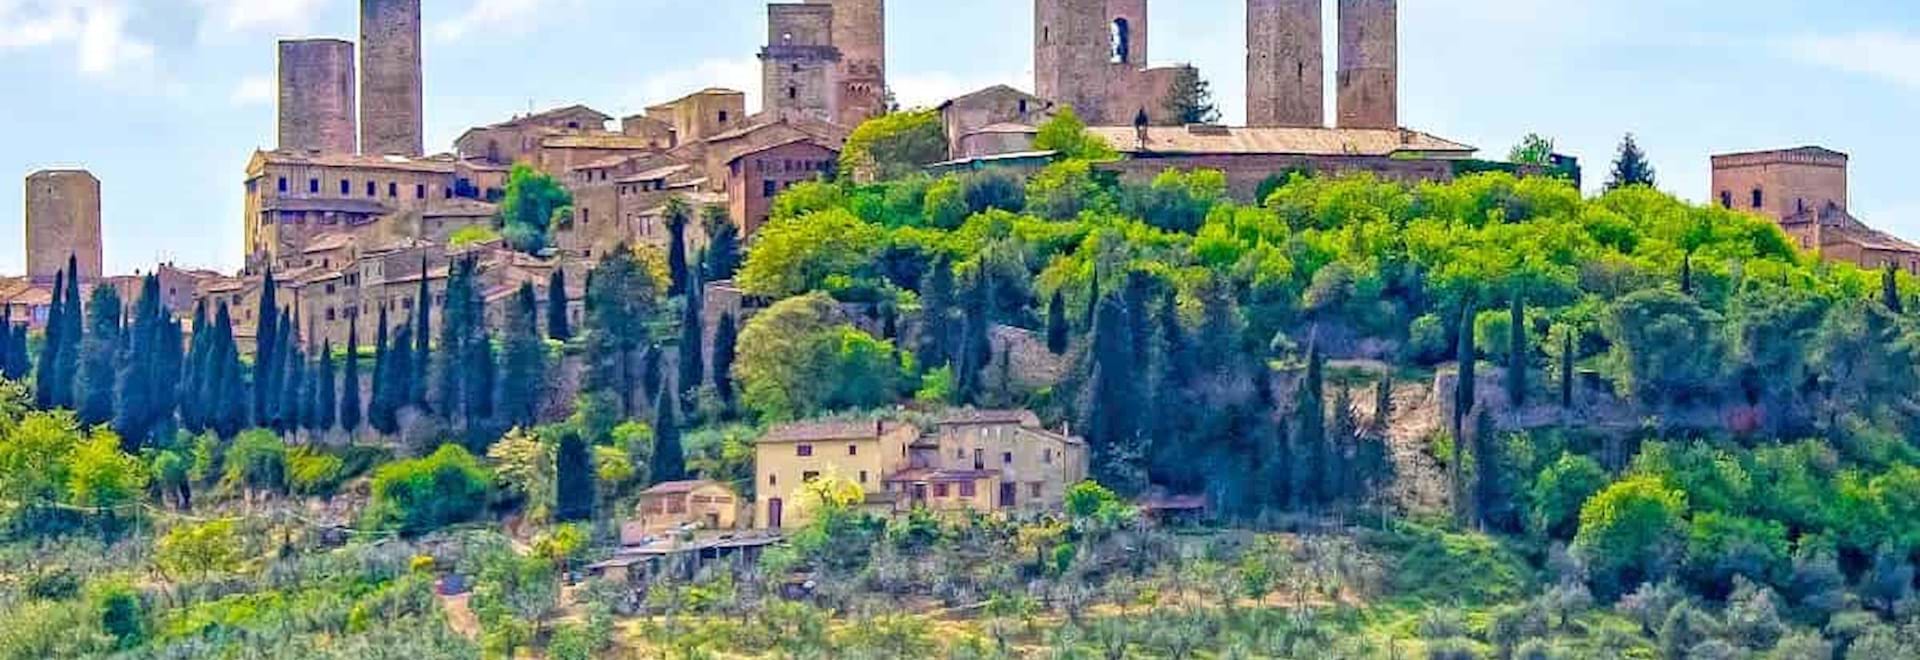 Beautiful view of San Gimignano